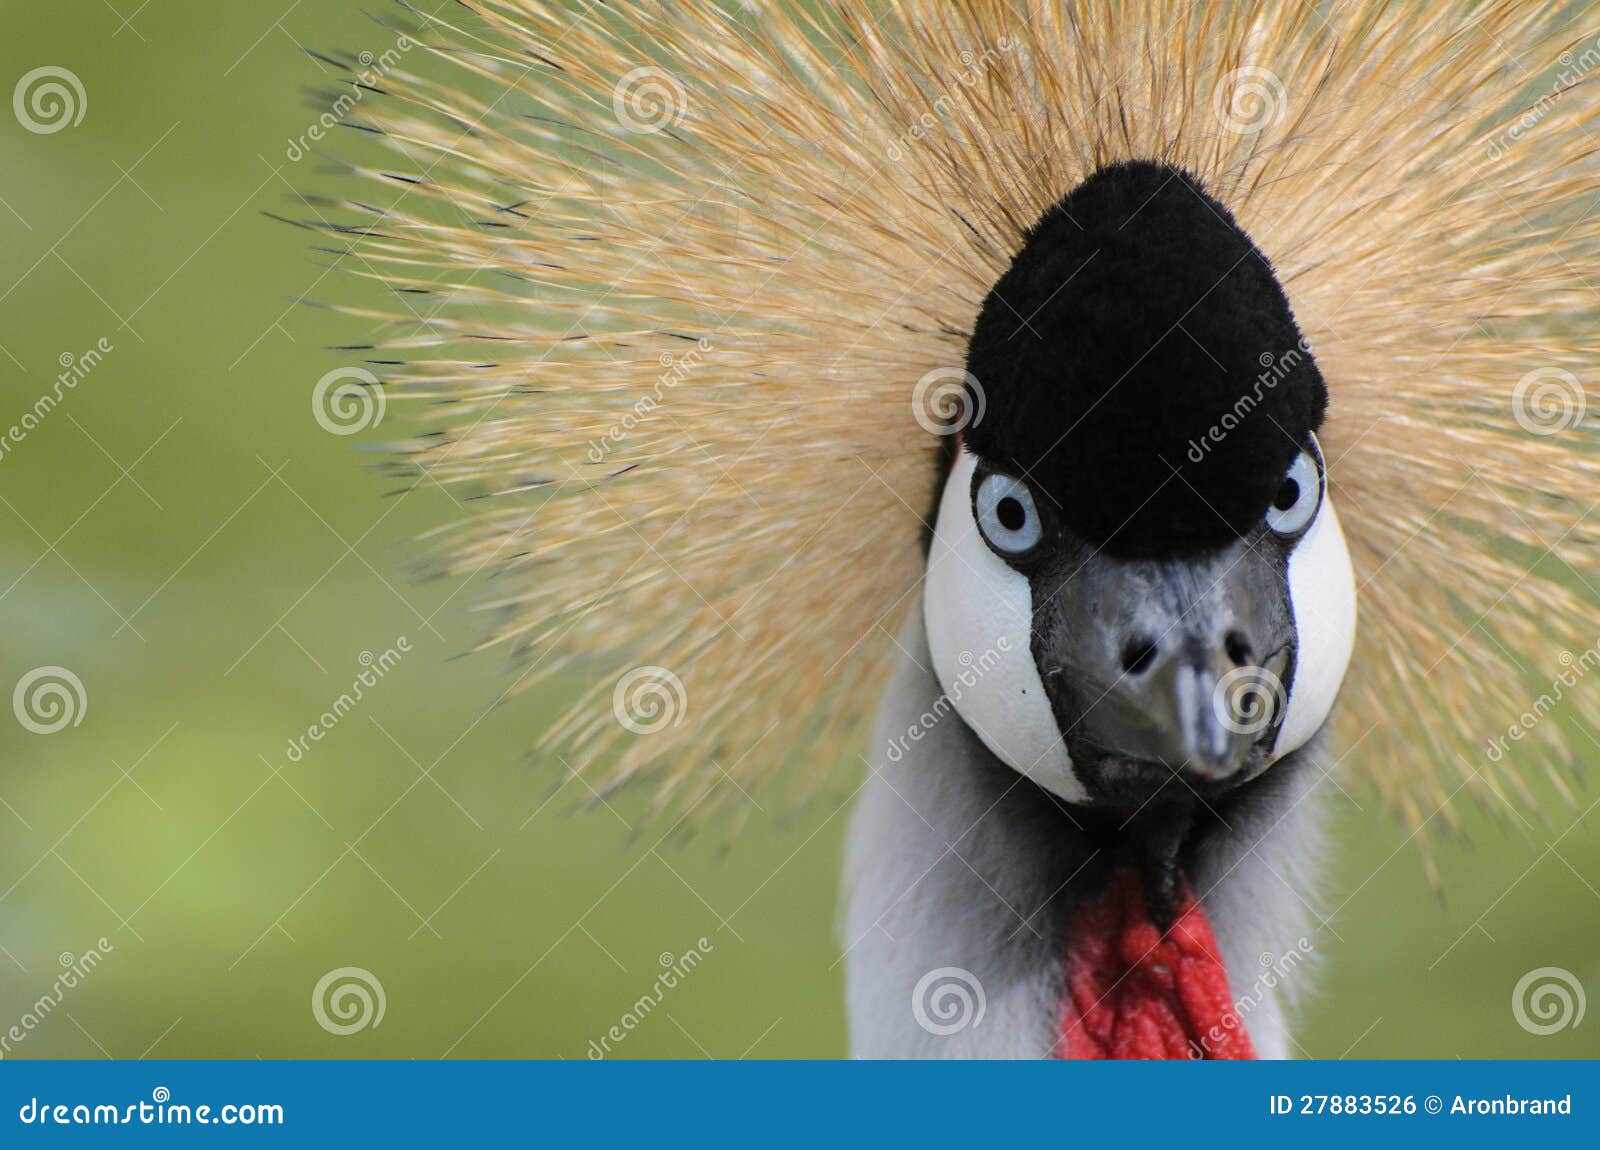 crowned crane - bird with a crazy hairdo